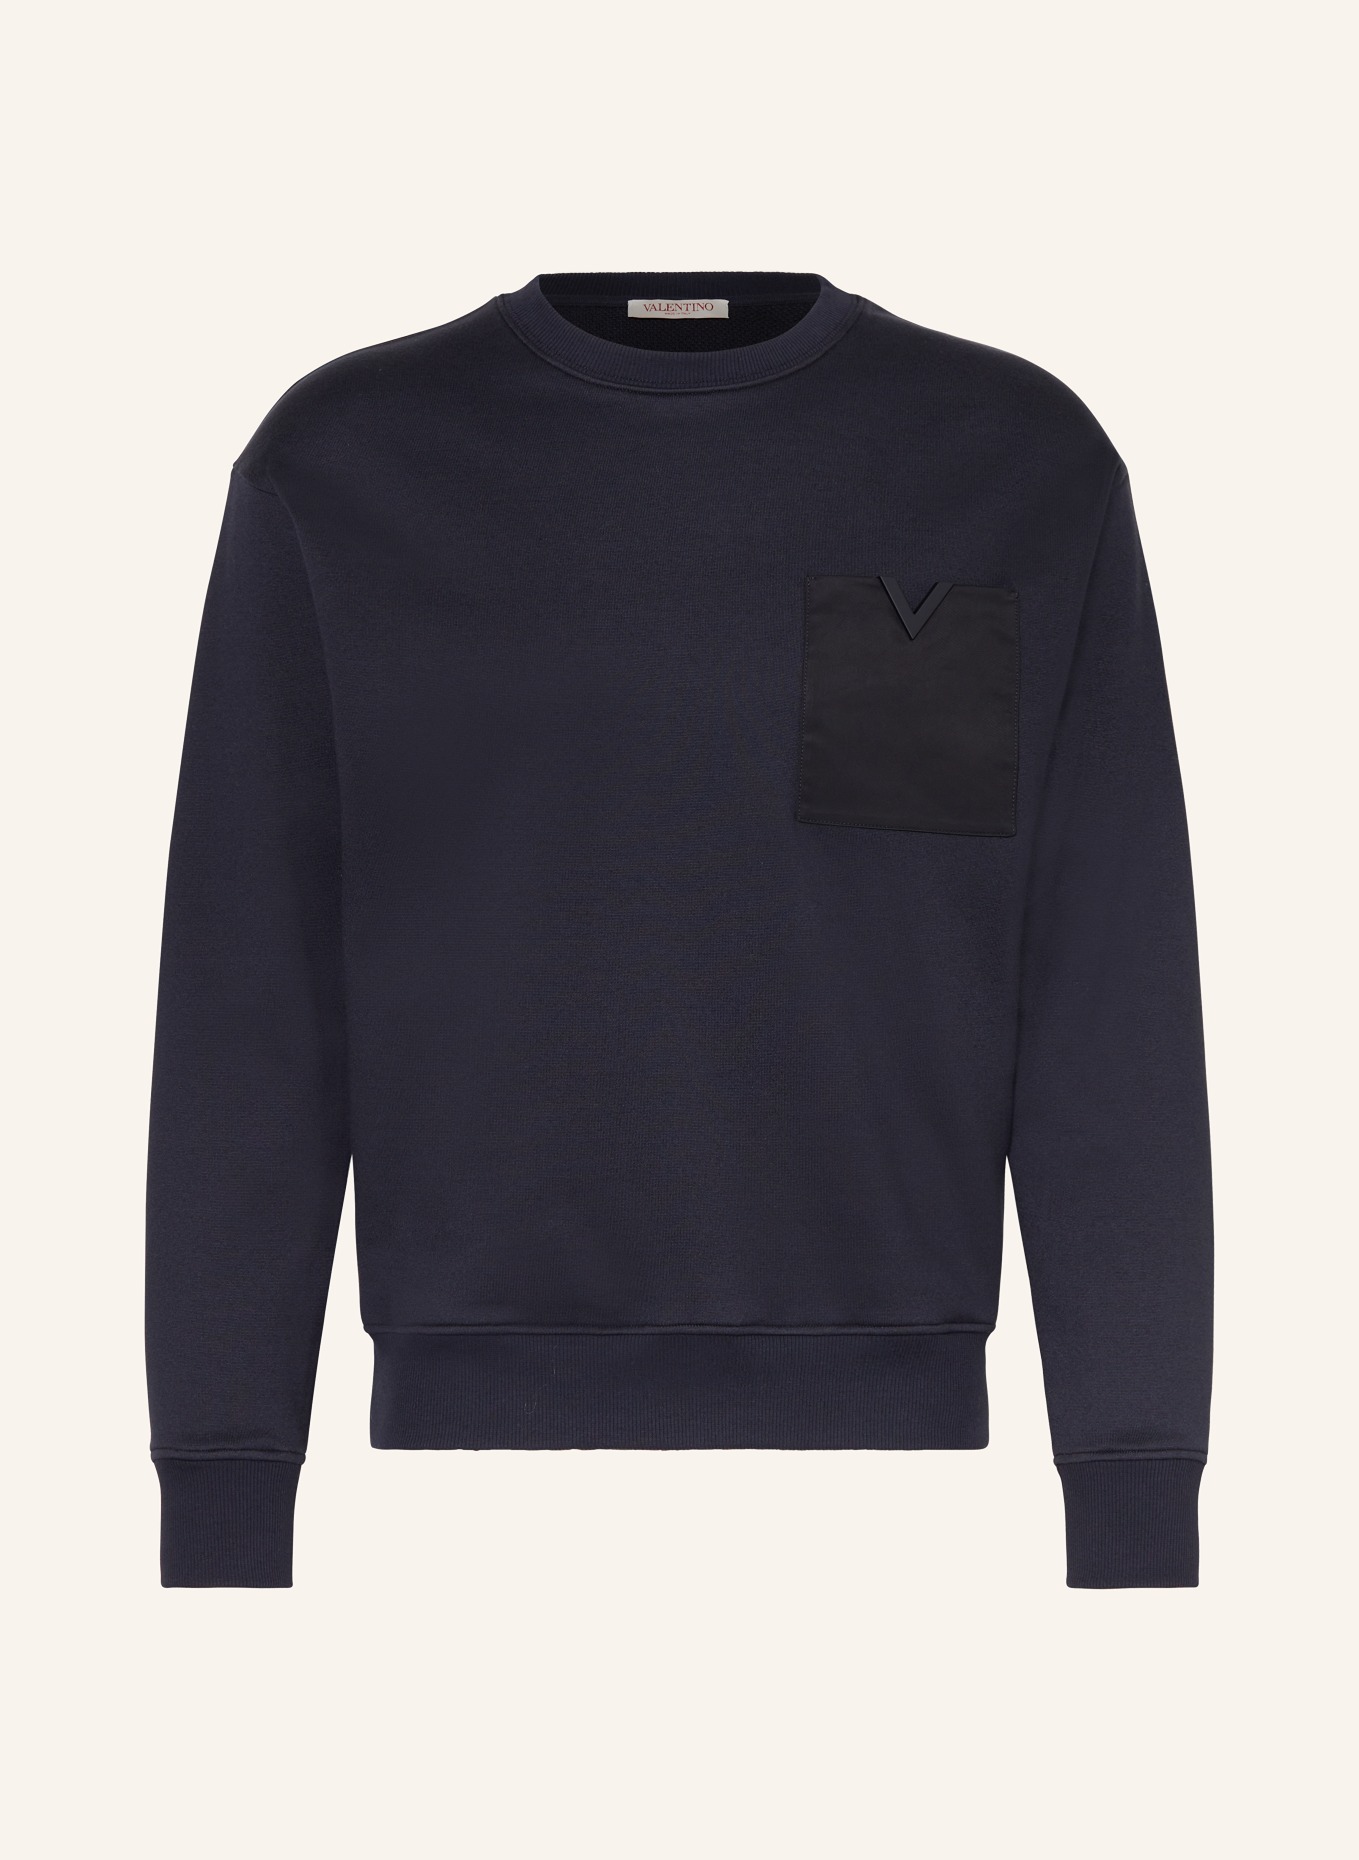 VALENTINO Sweatshirt, Farbe: DUNKELBLAU (Bild 1)